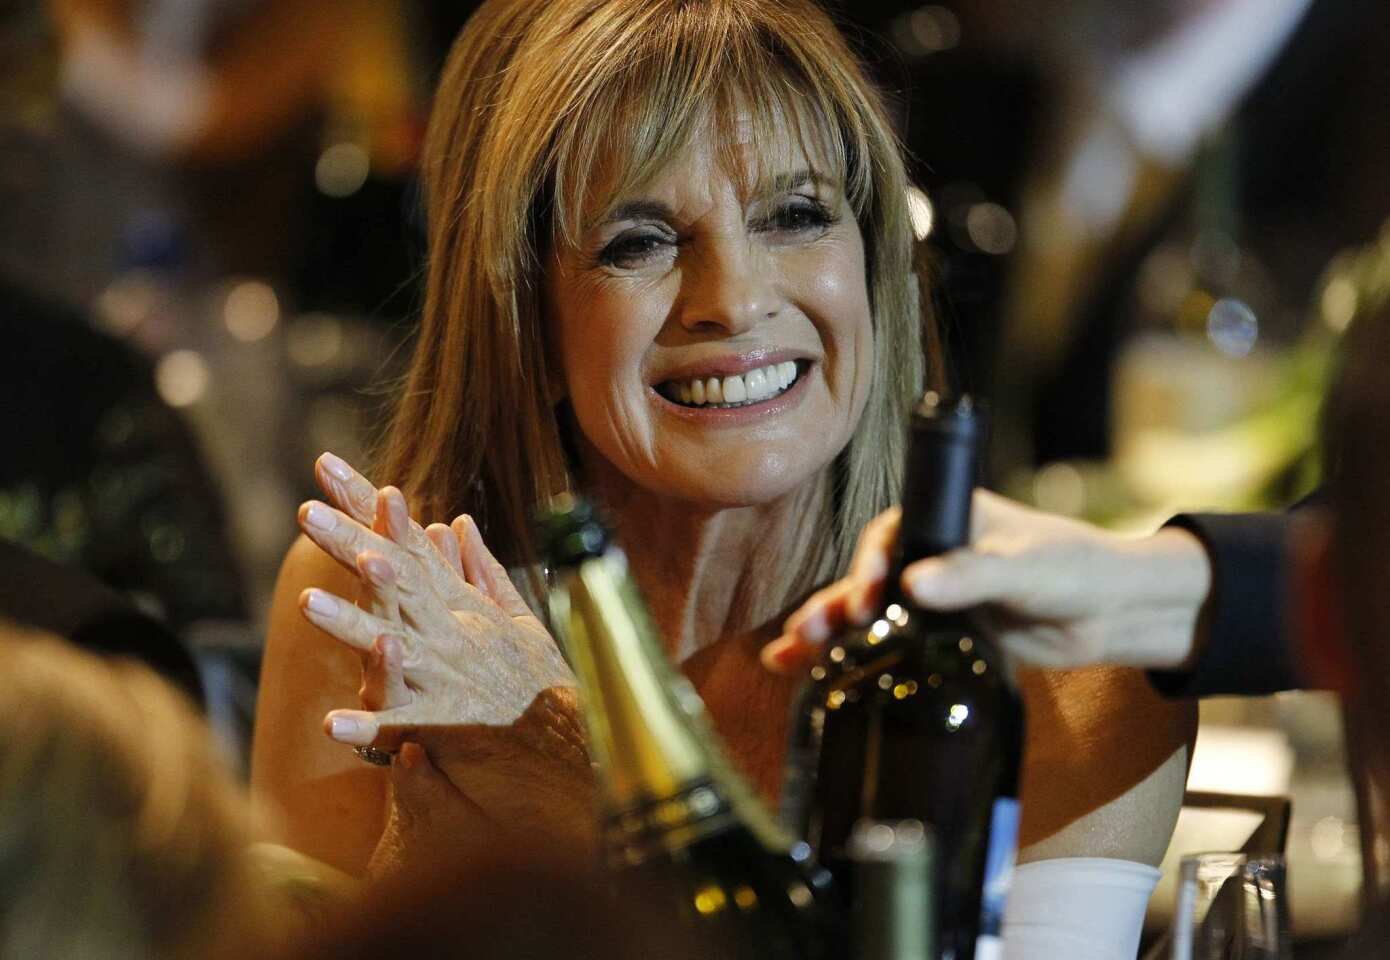 "Dallas" actor Linda Gray enjoys the company at the Screen Actors Guild Awards.